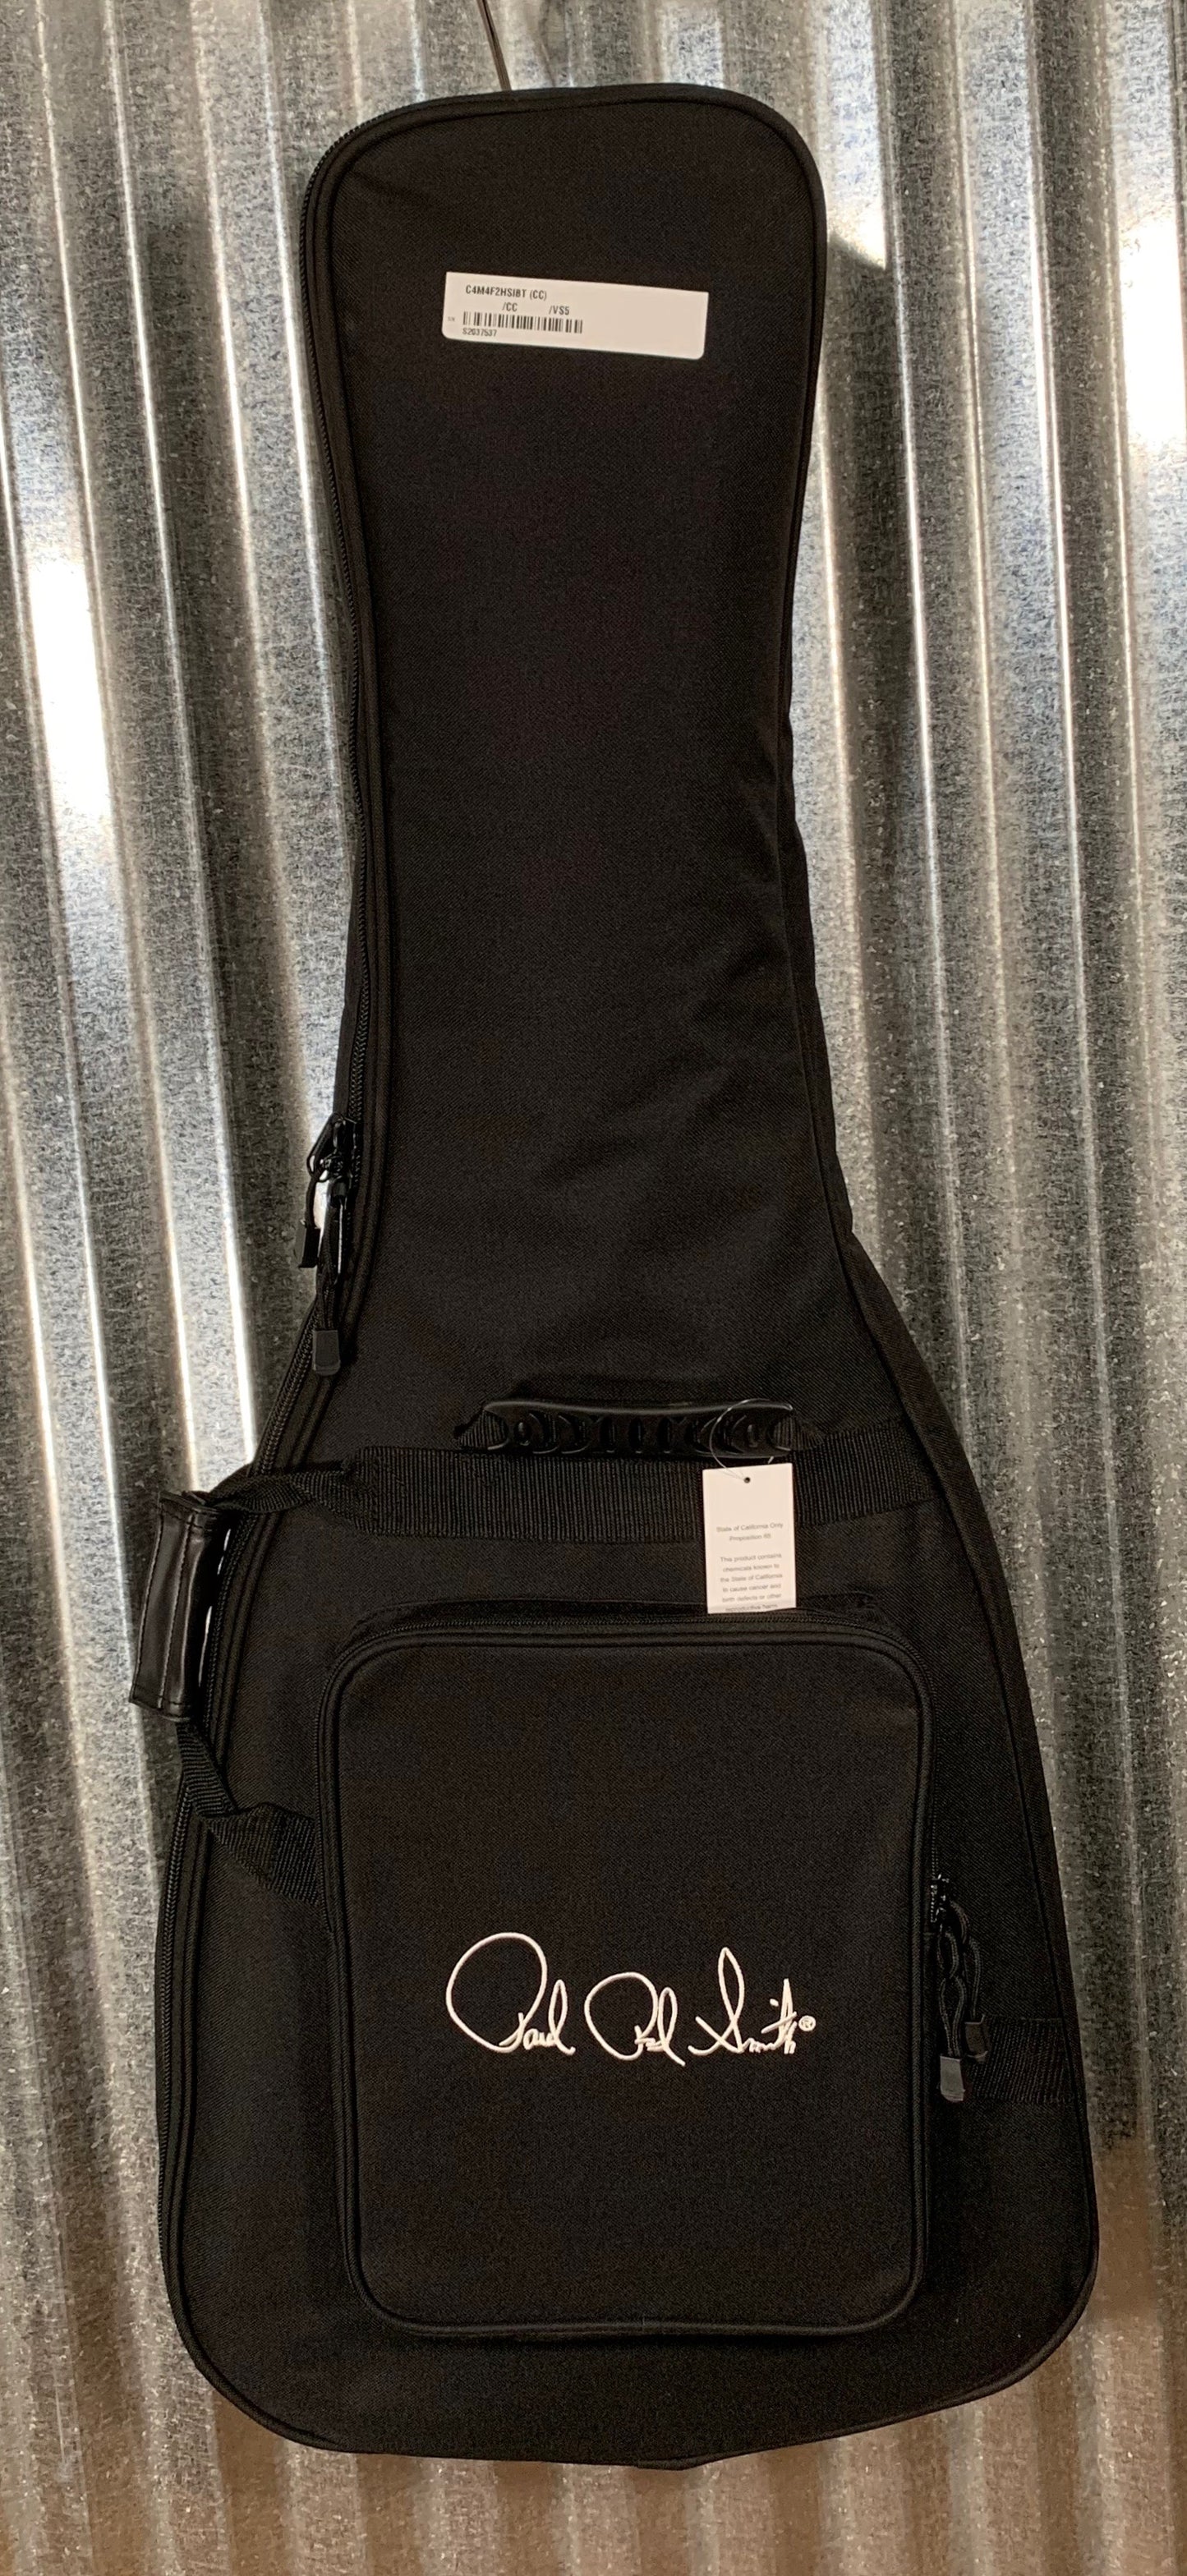 PRS Paul Reed Smith USA S2 Custom 24 Tortoise Smokeburst Guitar & Bag 2019 #7537